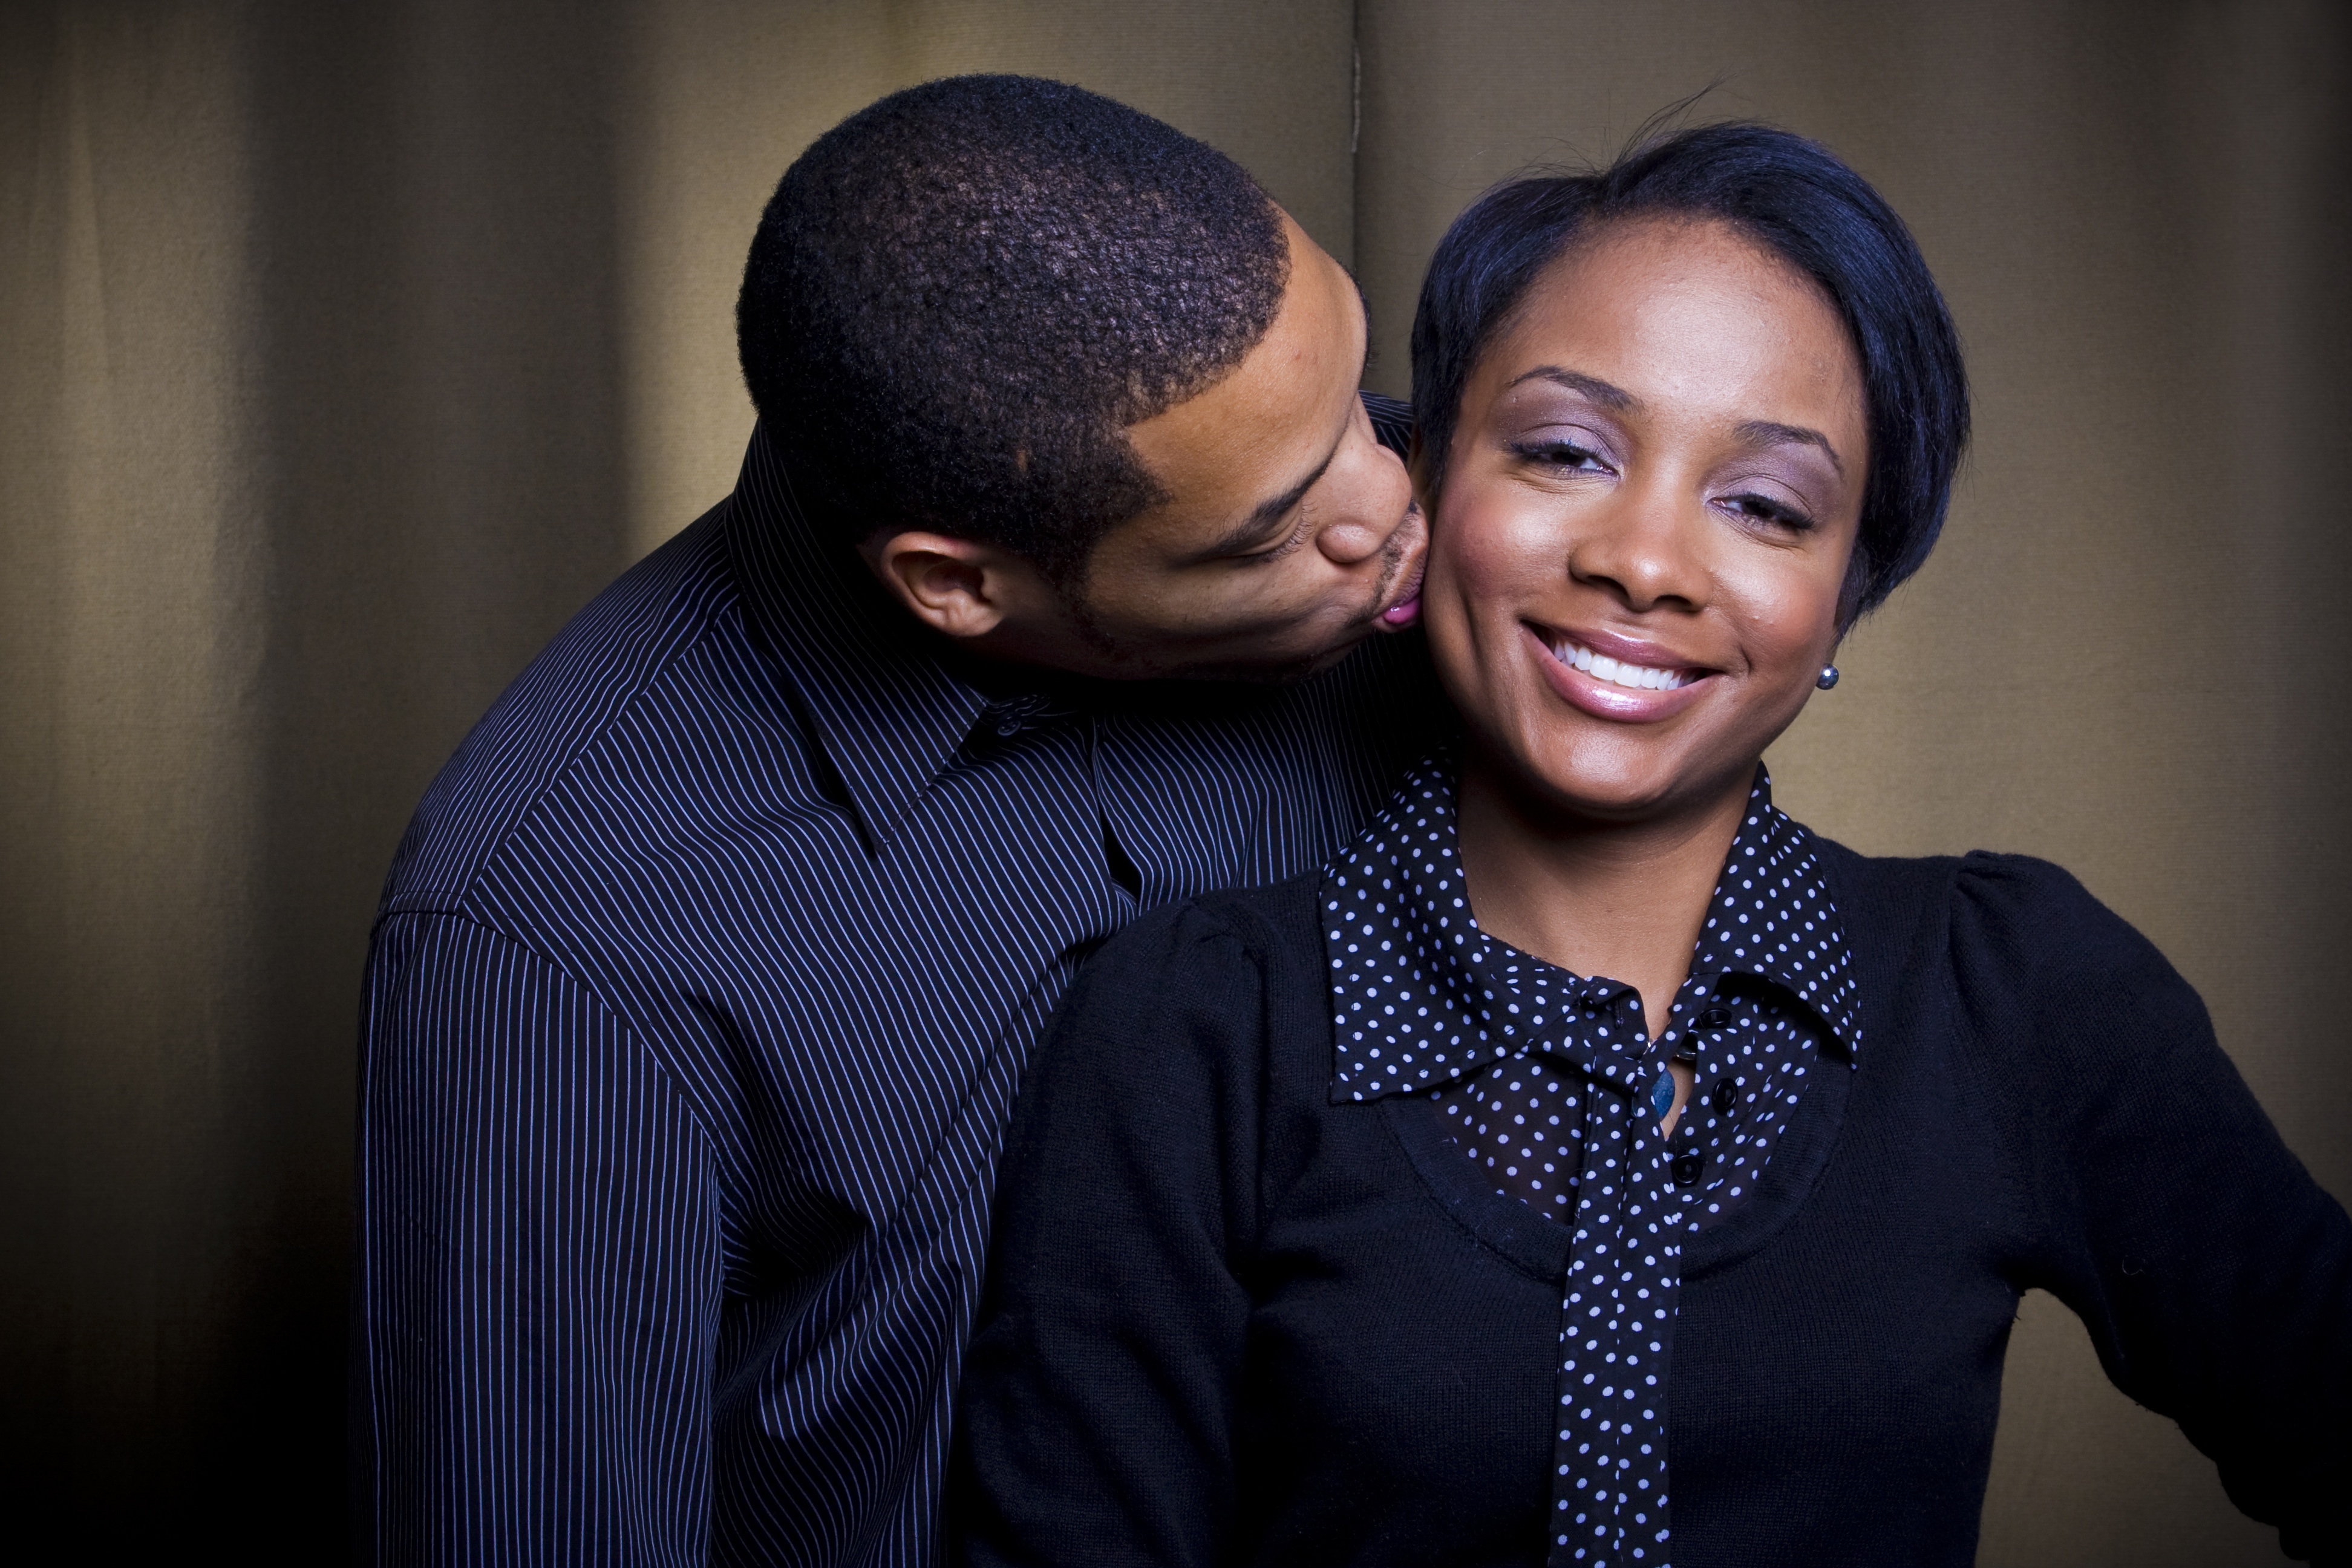 Husband made wife. Жены афроамериканцев. Негр целует в щеку. Husband. Black man and Black woman.